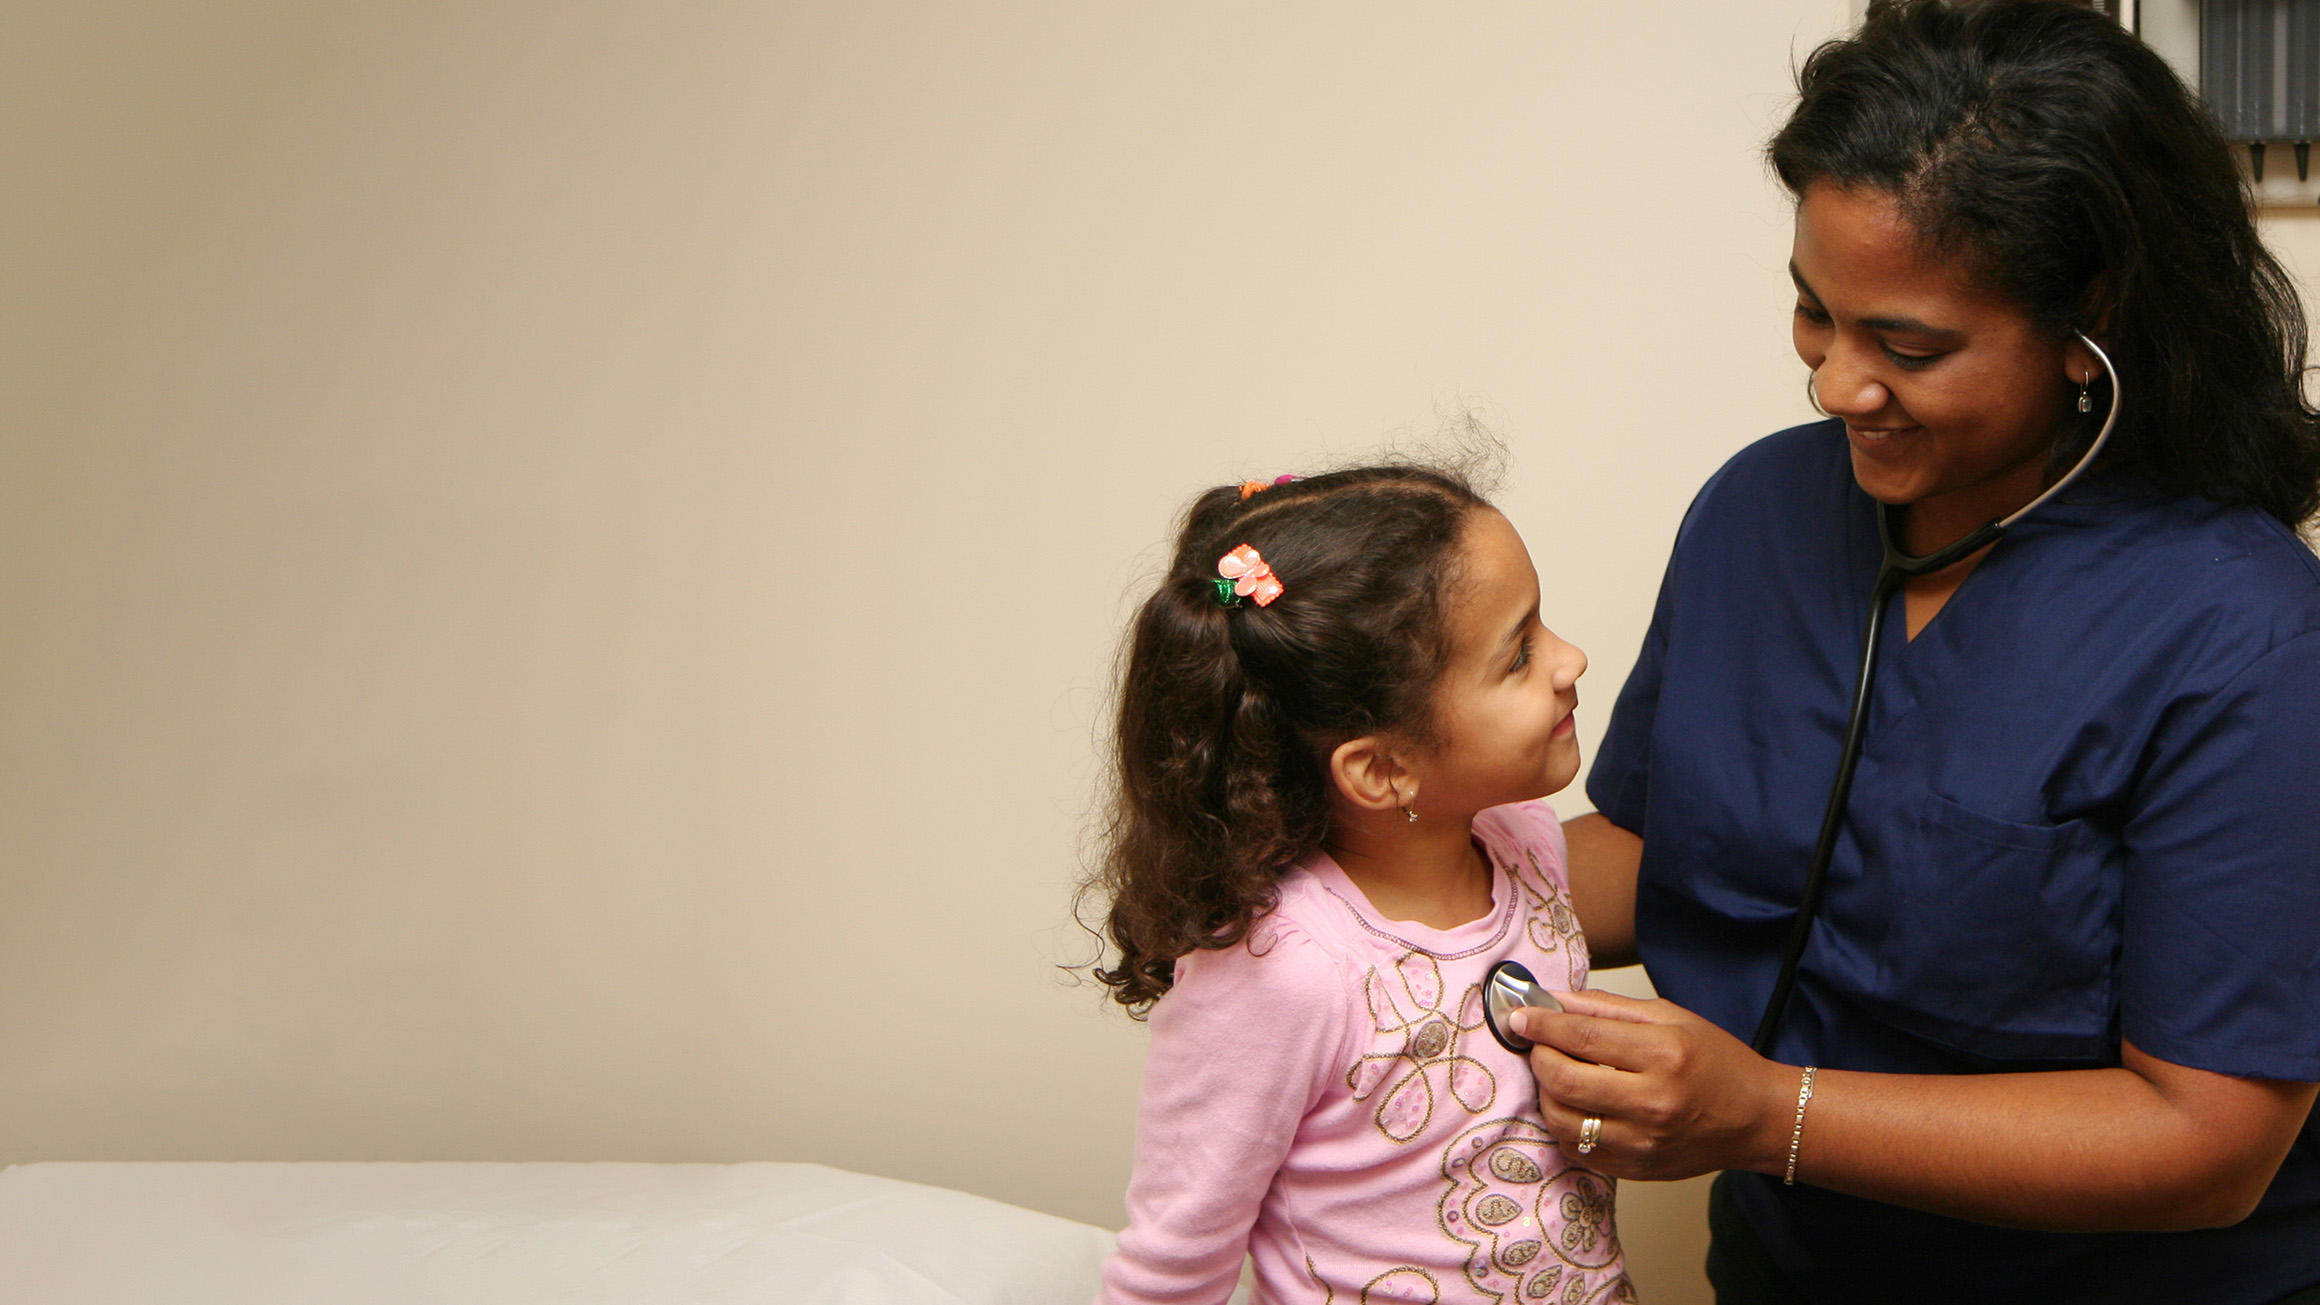 A nurse uses a stethoscope on a little girl